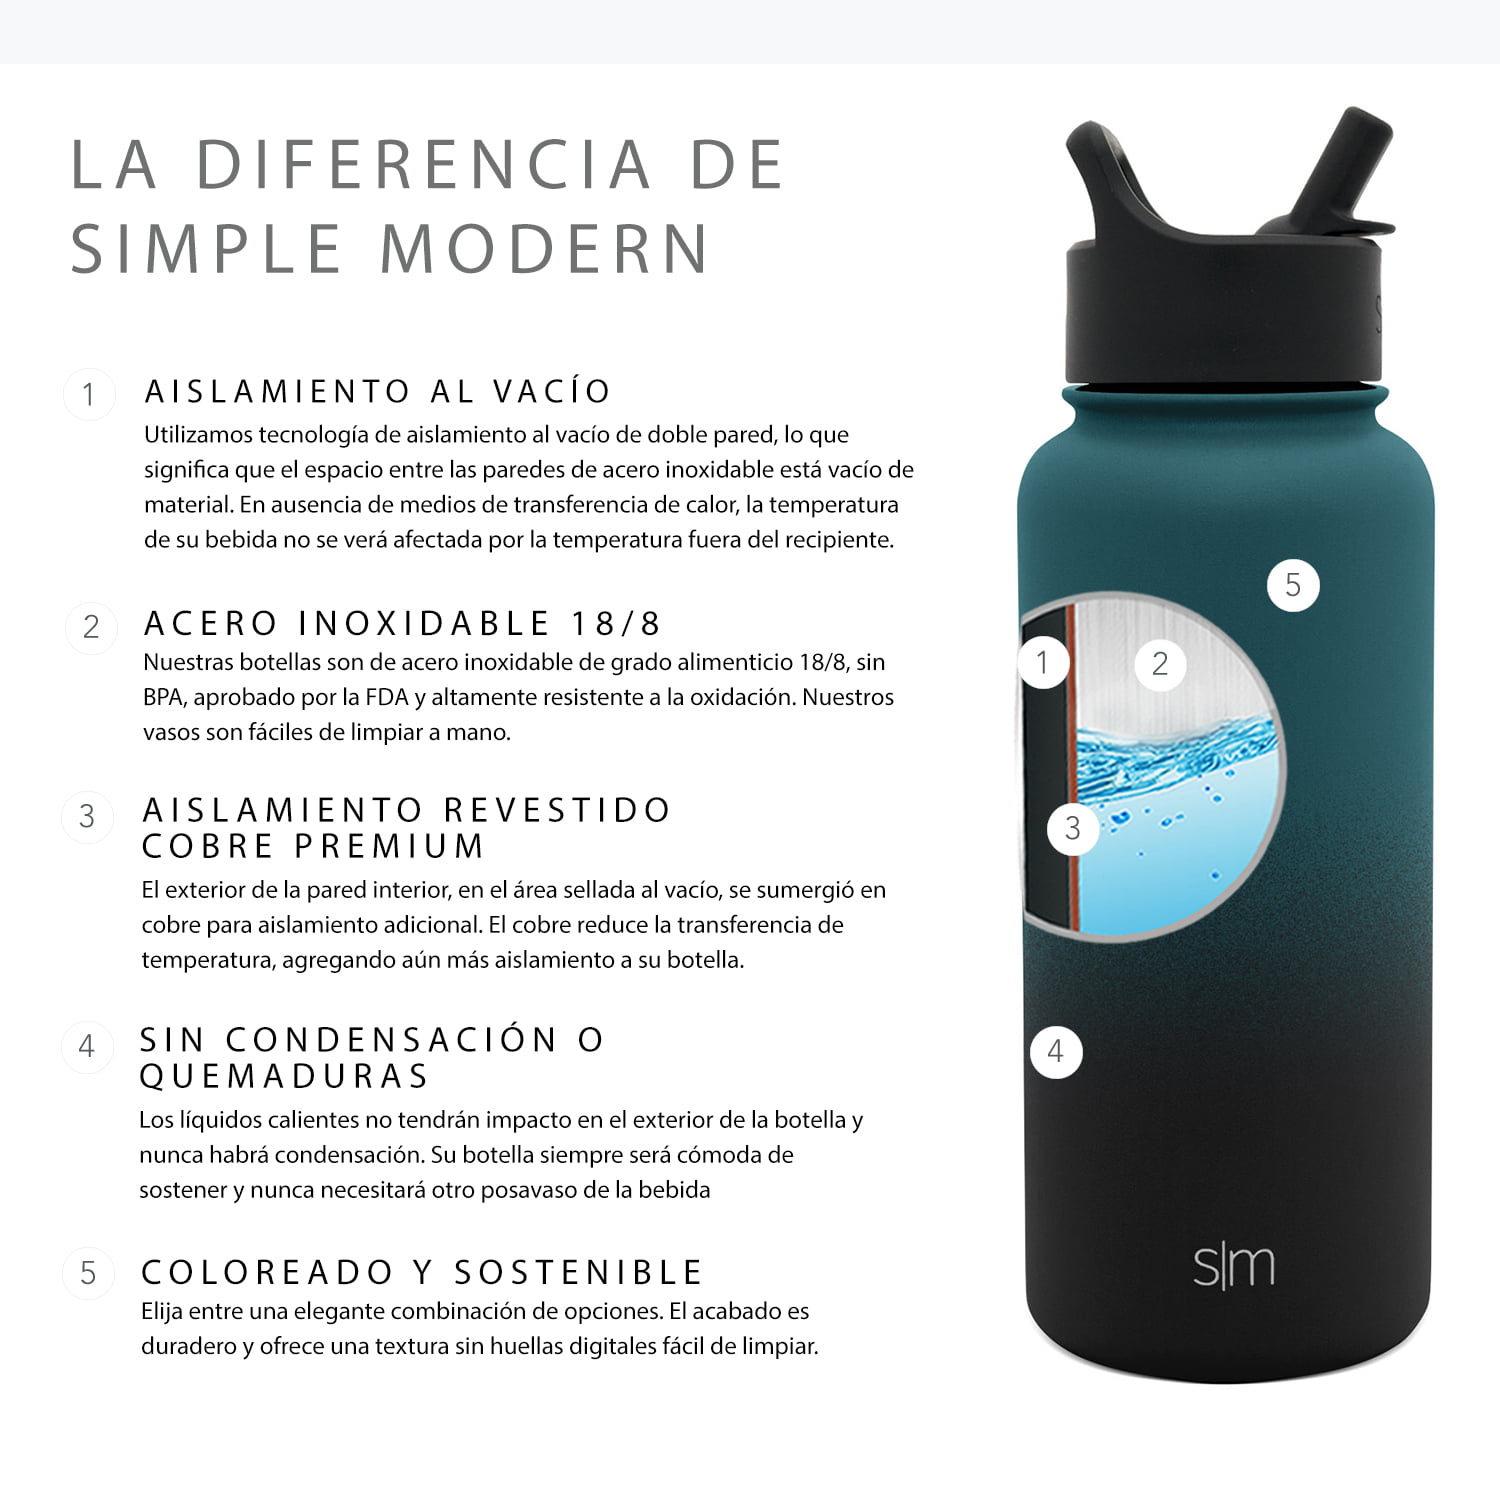 WNBA Summit H2O 32oz Water Bottle by Simple Modern